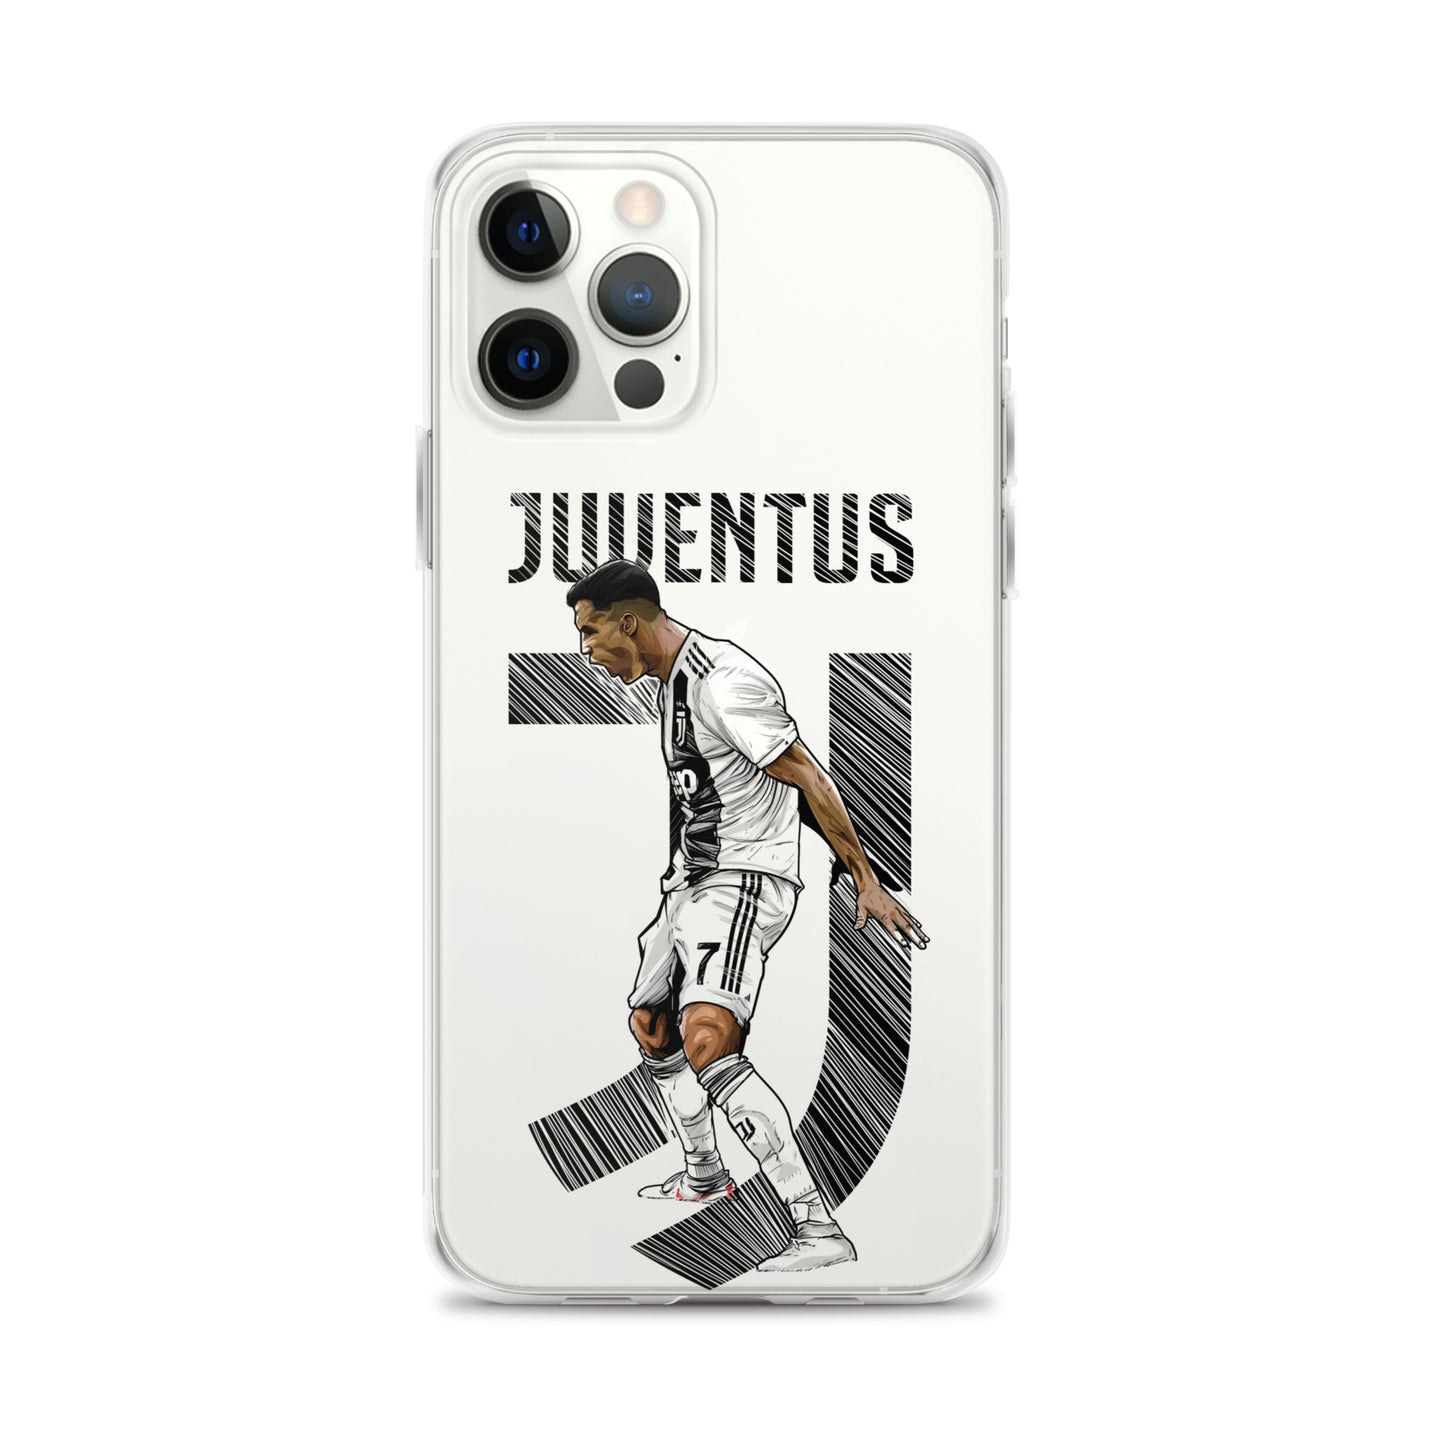 CR7 Juventus Siuu iPhone Case - The 90+ Minute